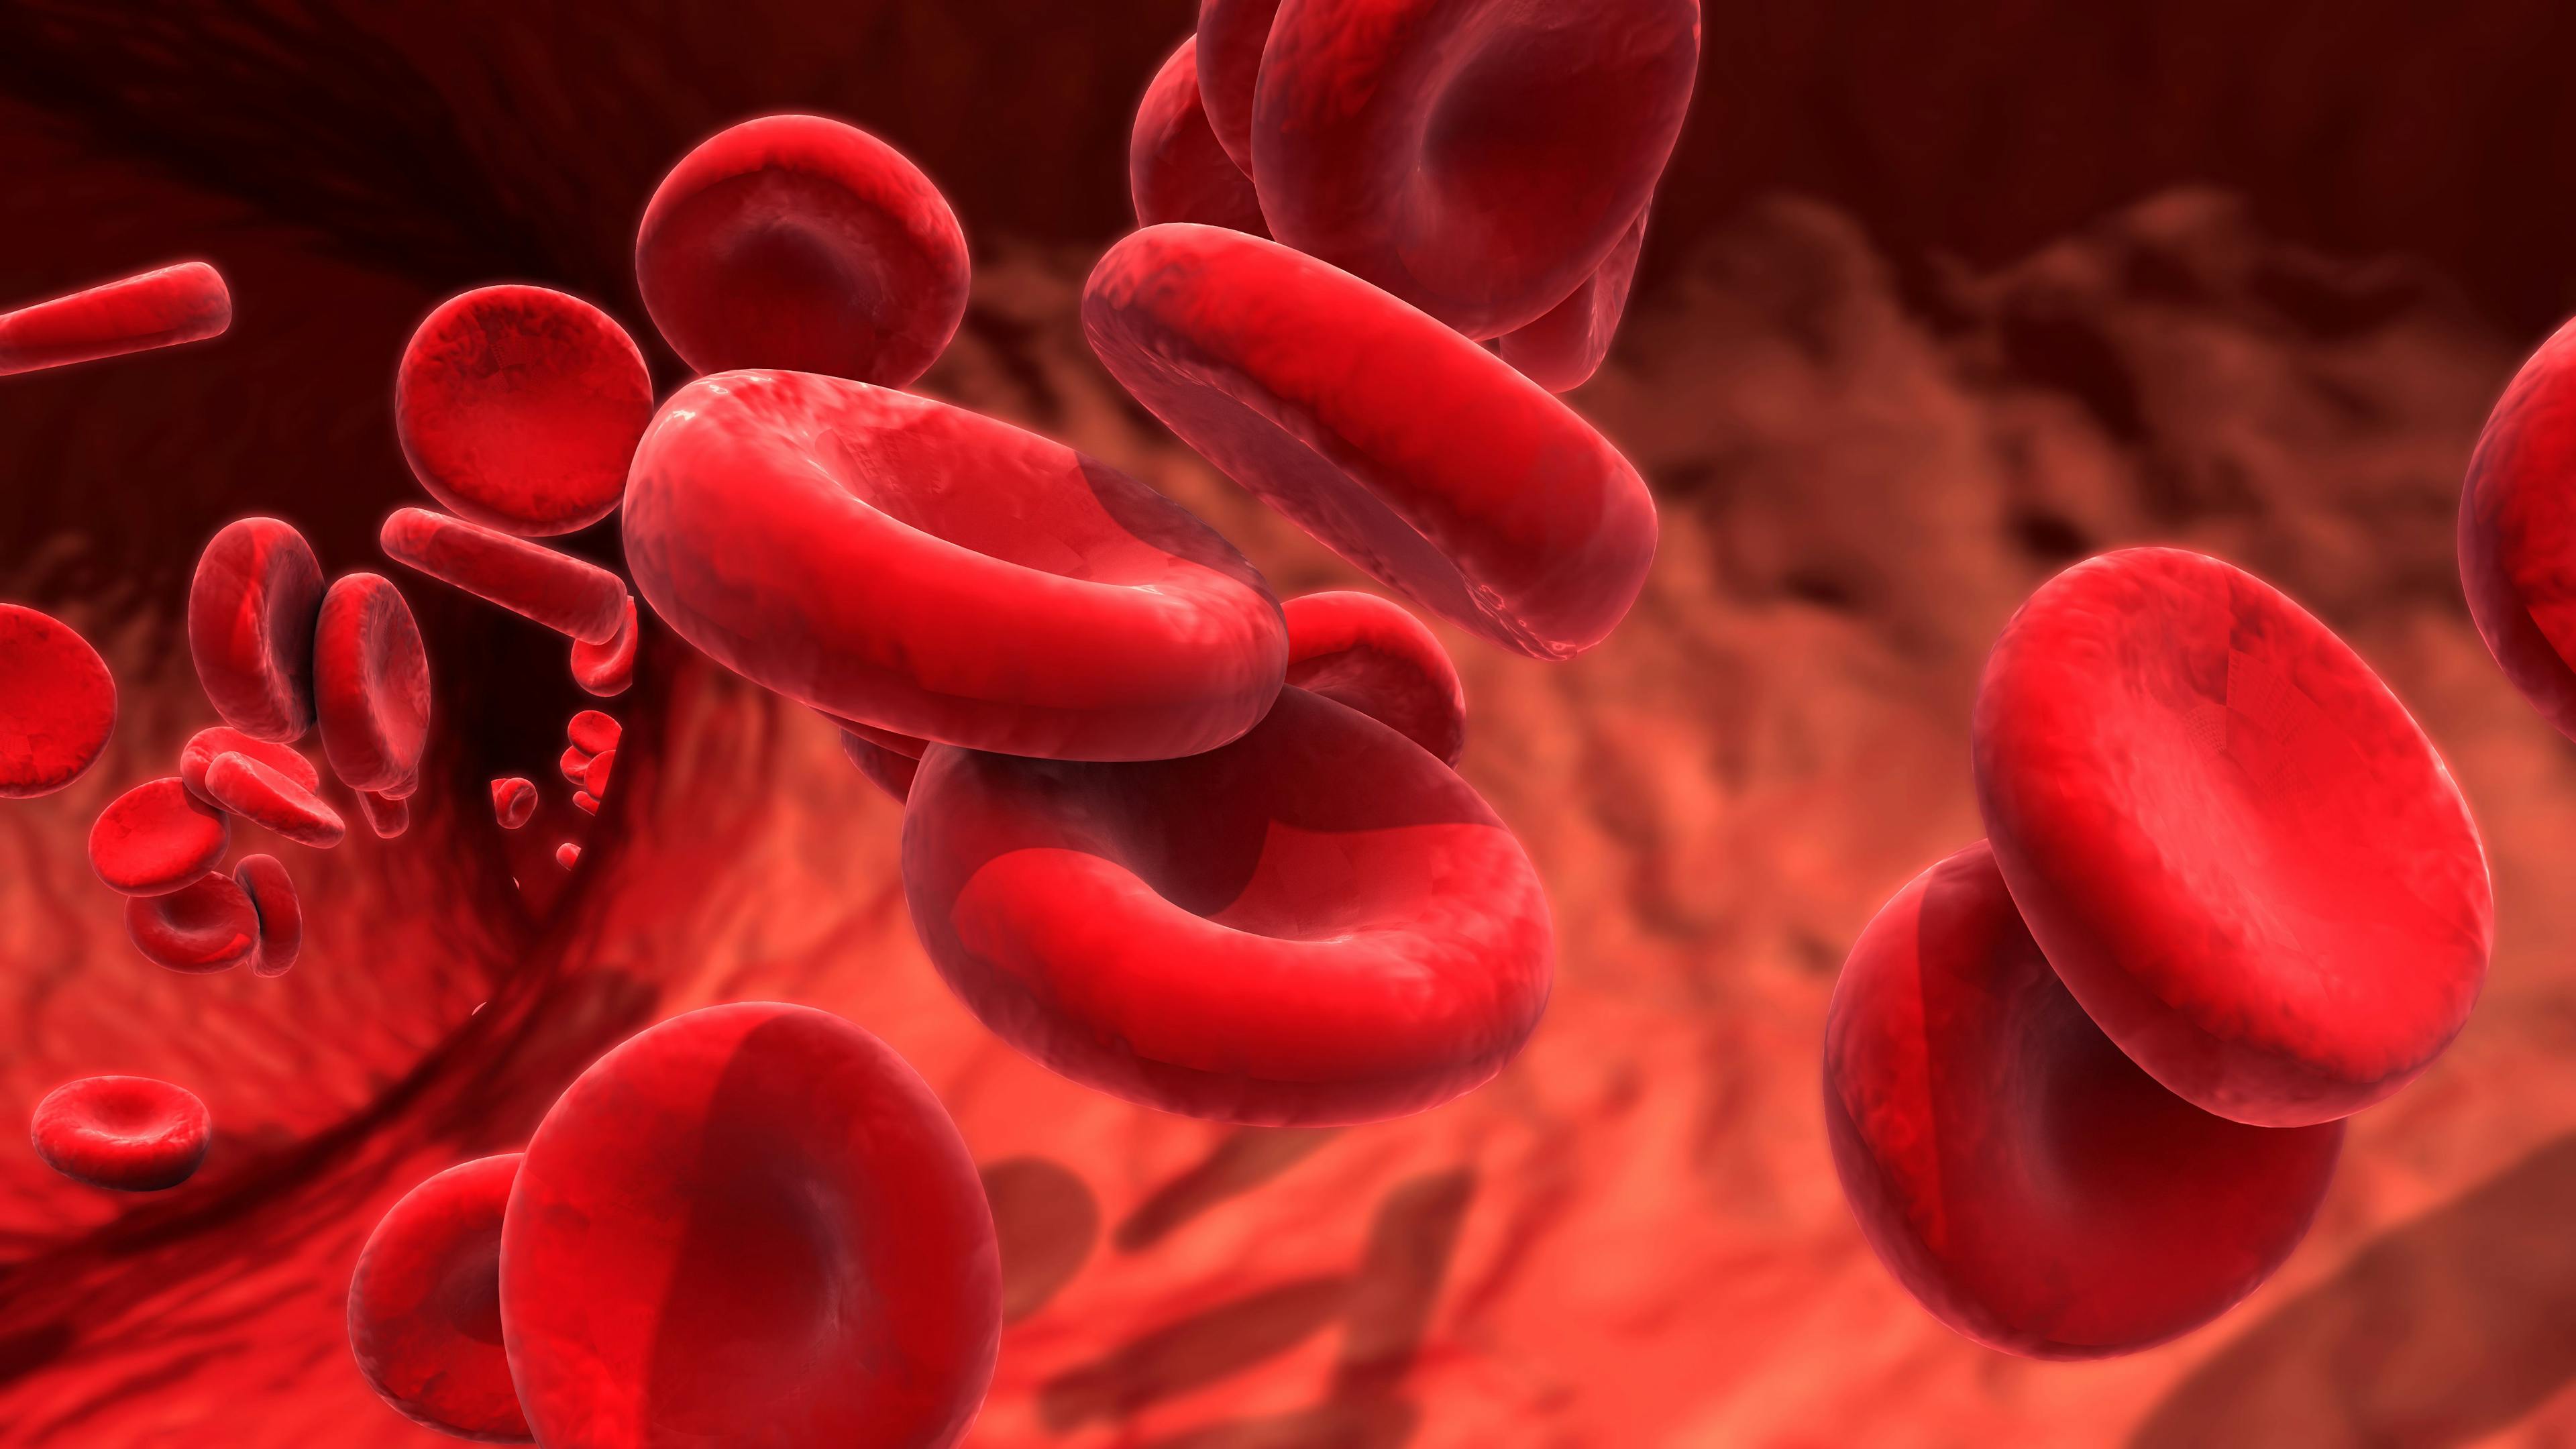 Hemgenix Approved in EU for Hemophilia B 